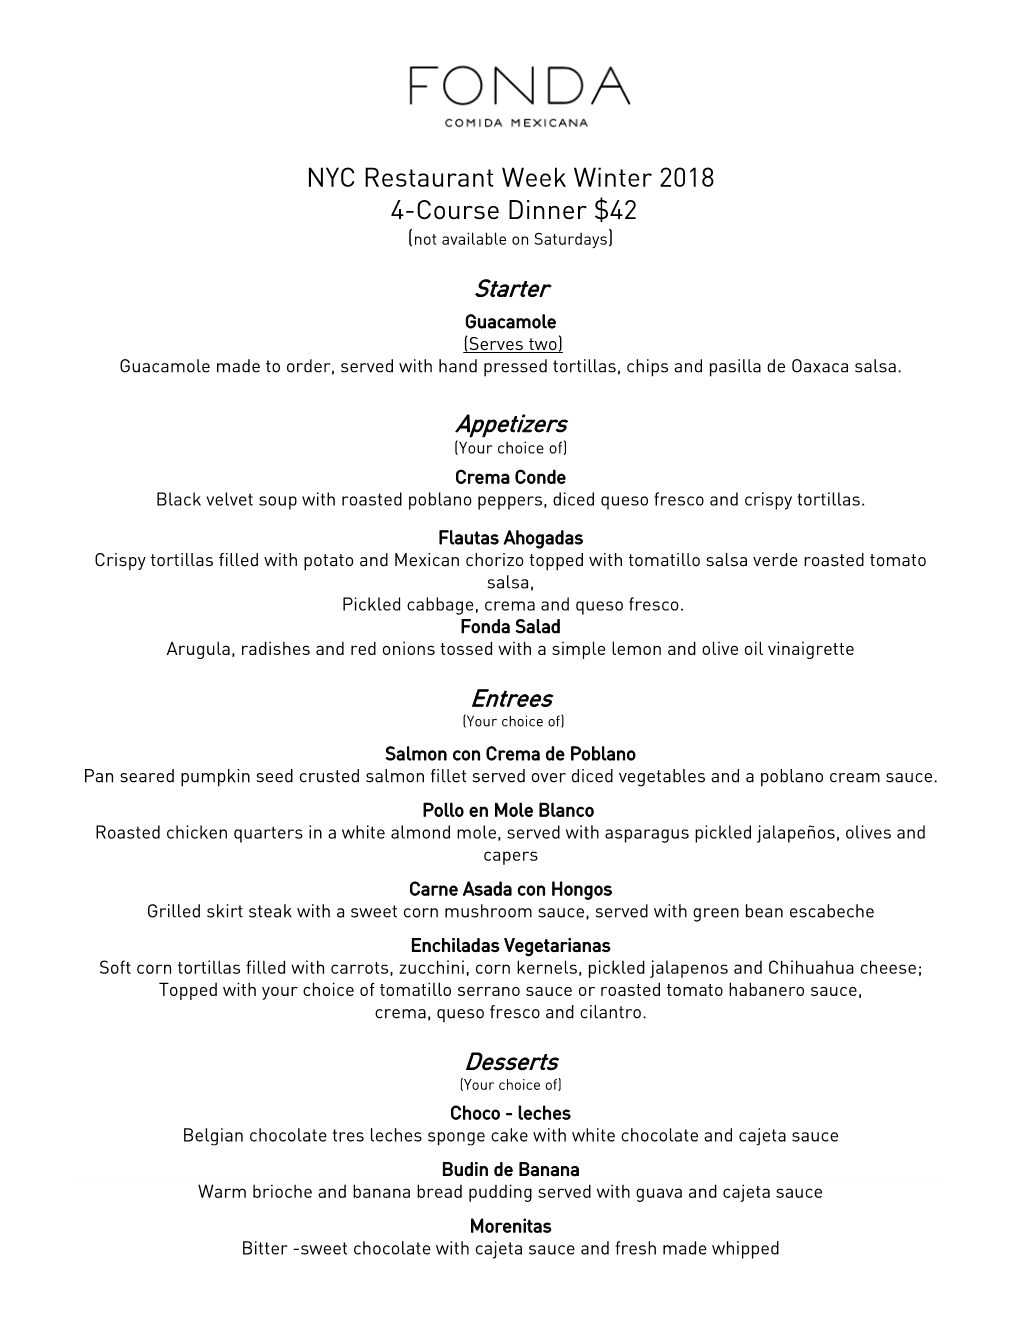 NYC Restaurant Week Winter 2018 4-Course Dinner